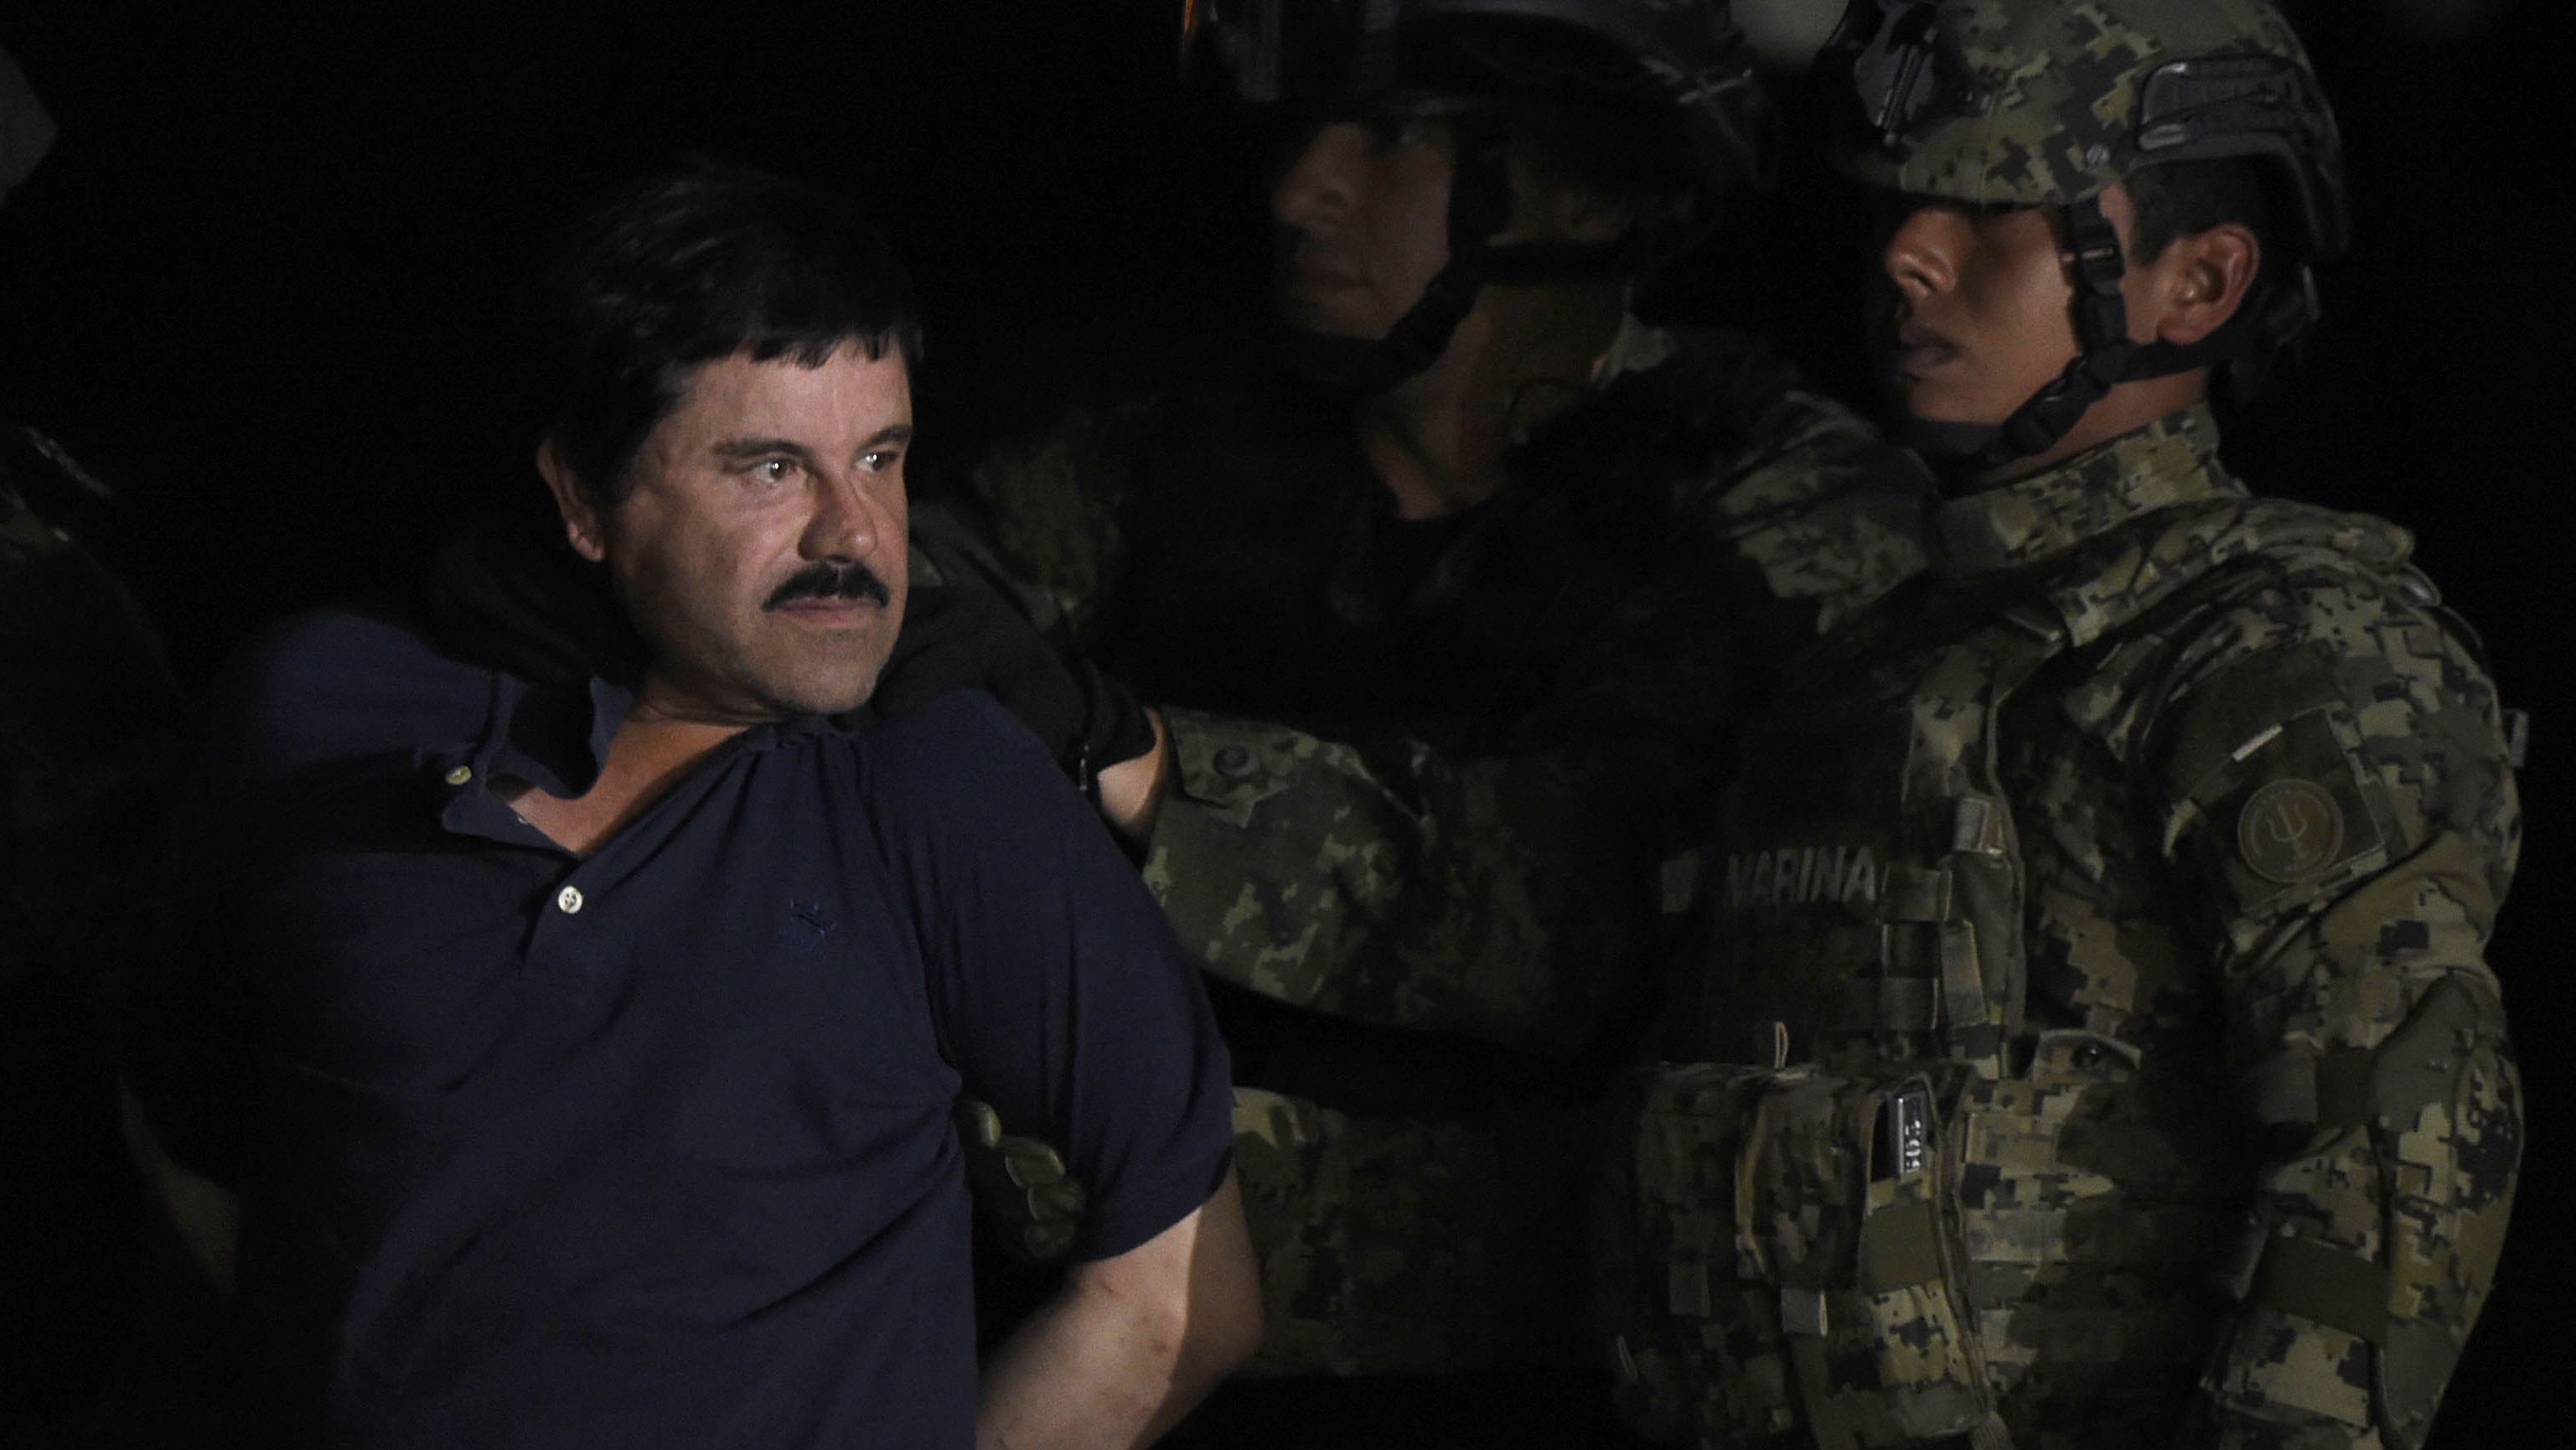 Drug kingpin Joaquin "El Chapo" Guzman in custody on January 8, 2016.